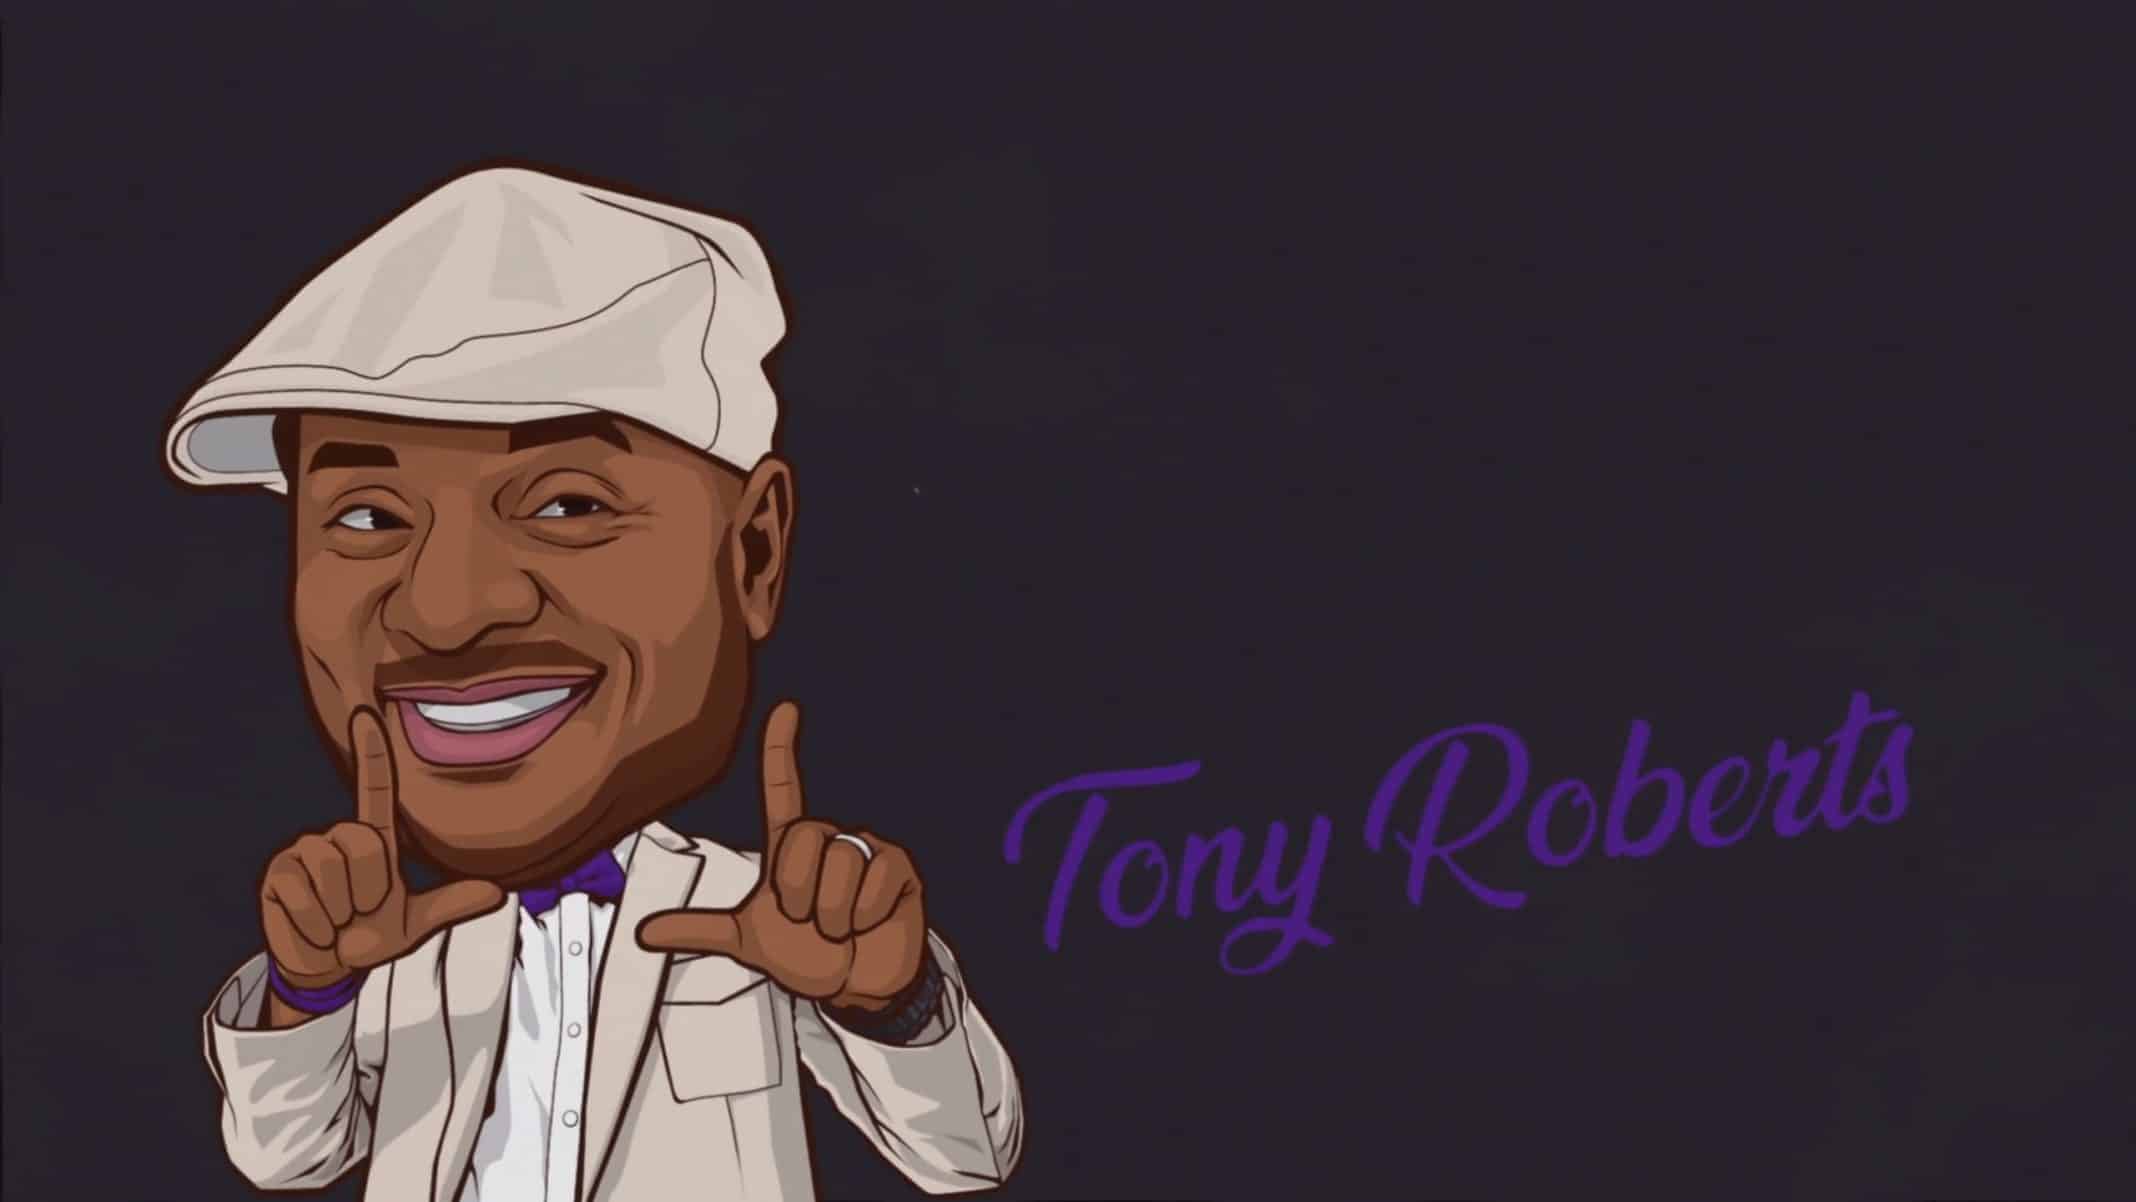 An illustration of Tony Roberts